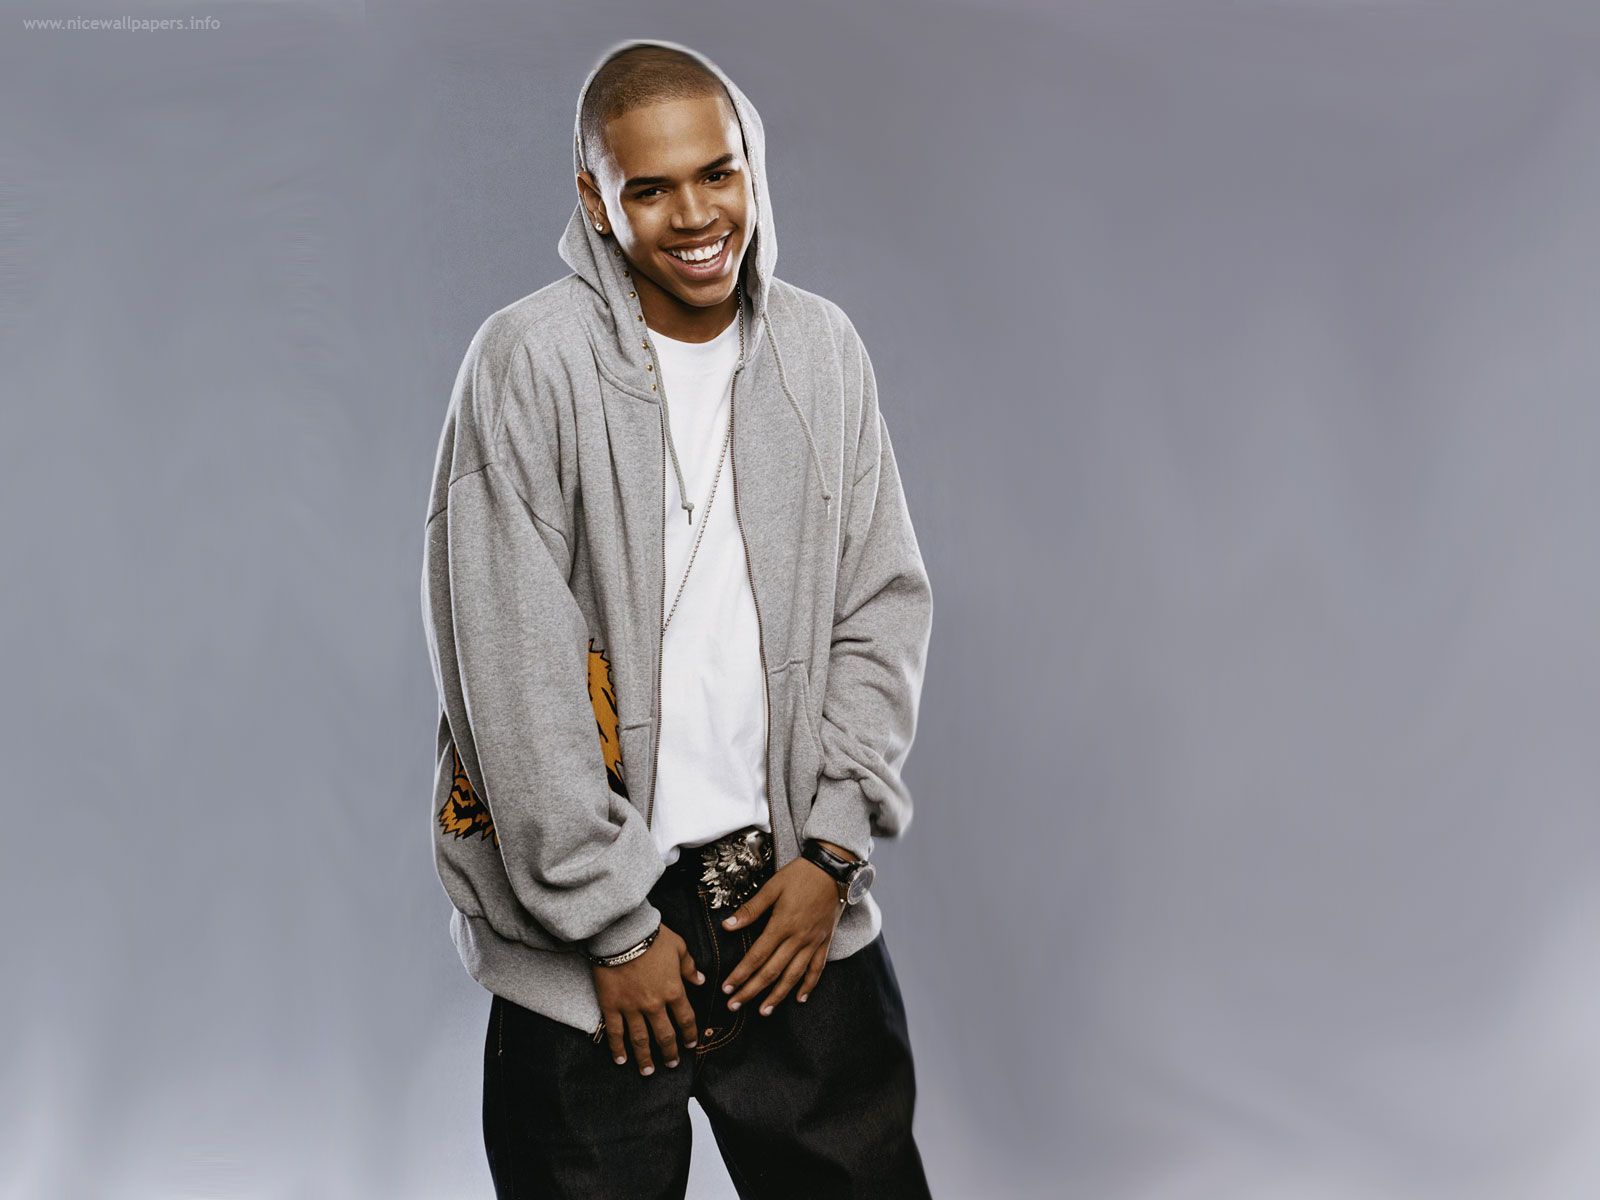 Chris Brown Desktop Wallpaper, Chris Brown Background. Cool